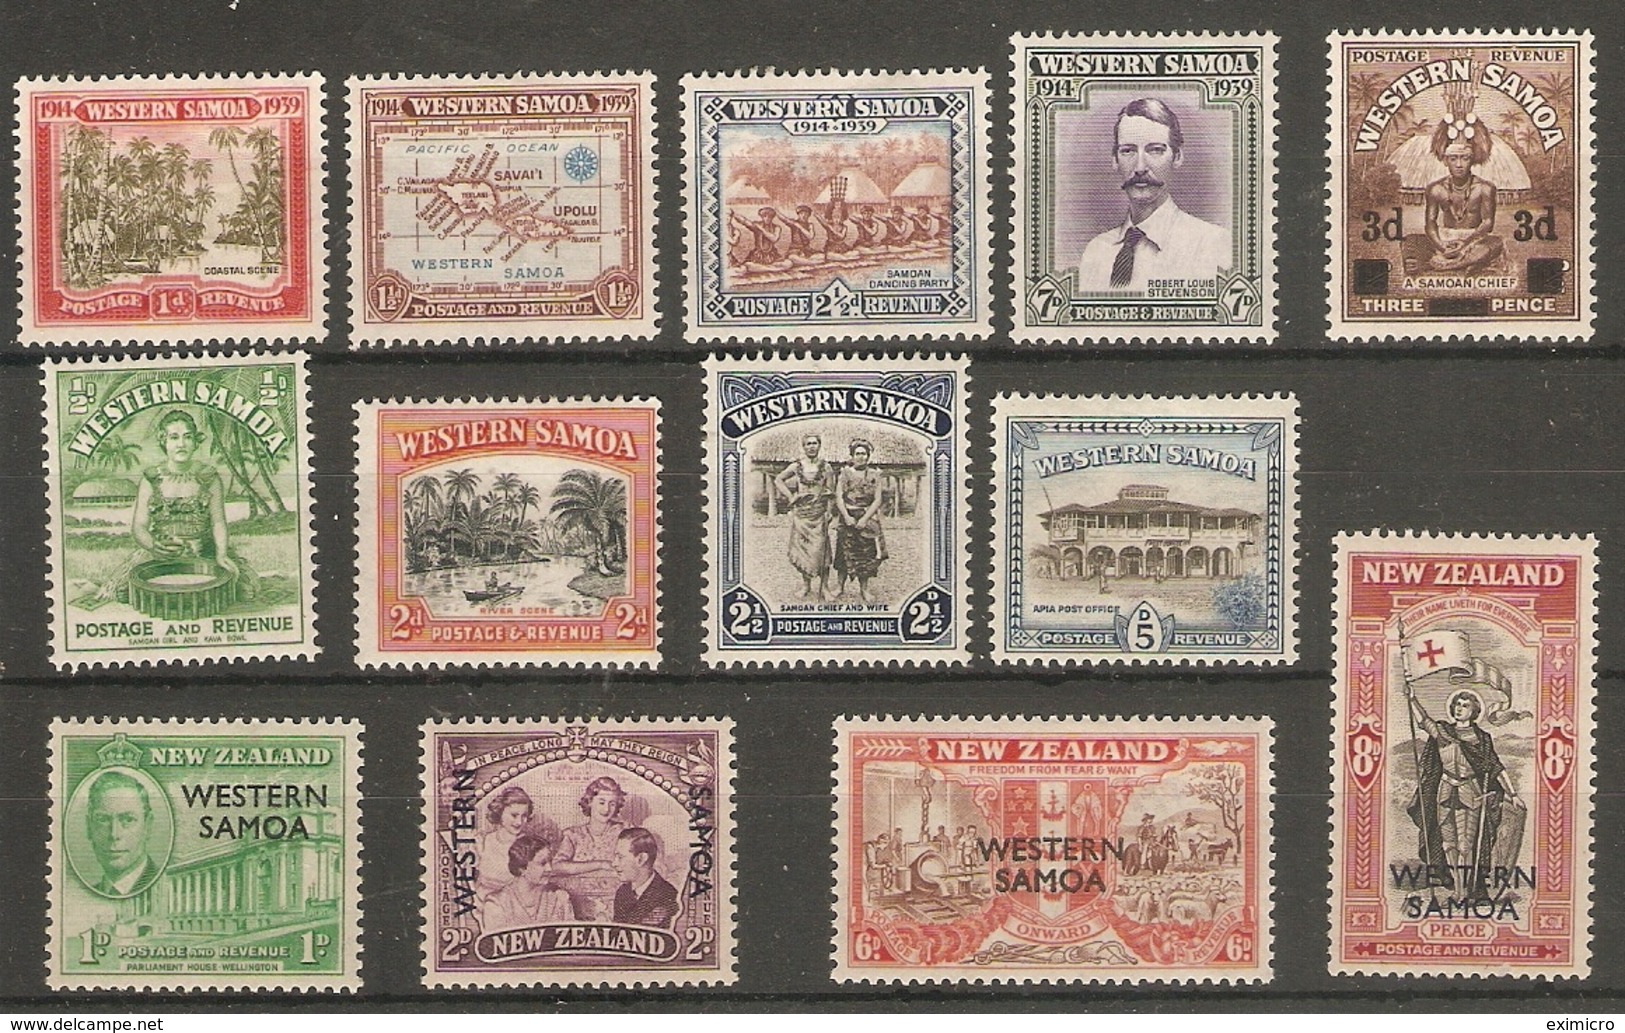 SAMOA 1939 - 1946 SETS SG 195/198;199; 200/205; 215/218 UNMOUNTED MINT/LIGHTLY MOUNTED MINT Cat £28 - Samoa